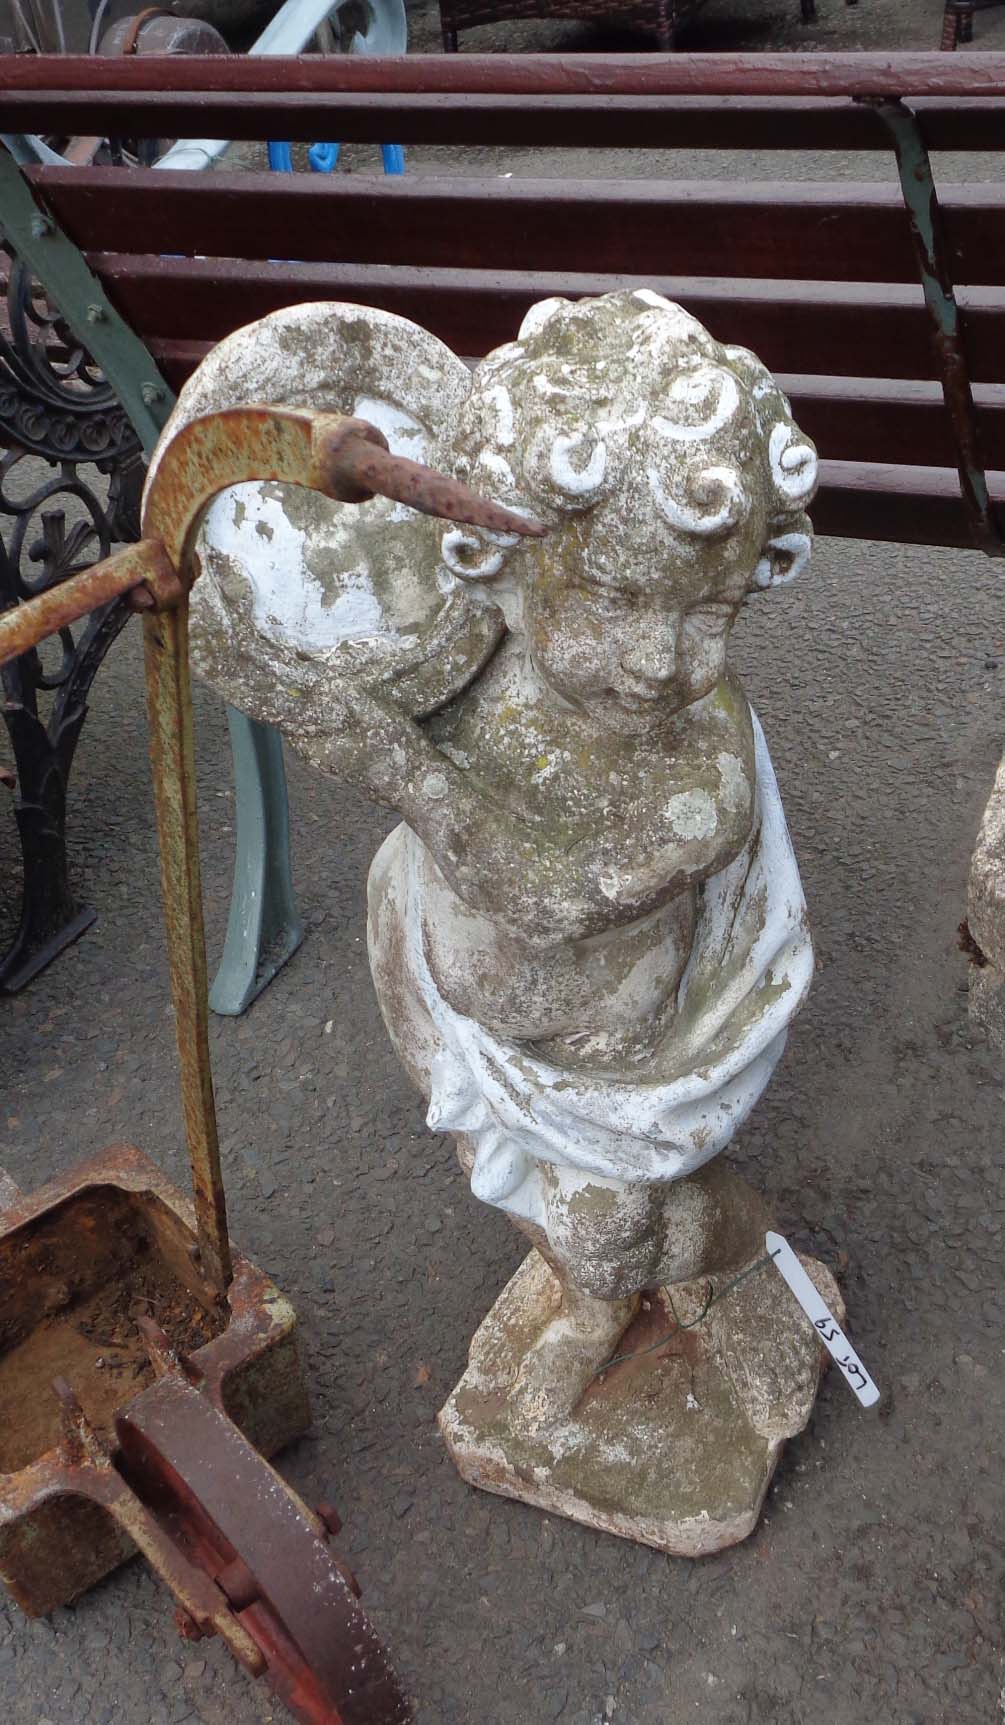 An old concrete garden statue depicting a cherub playing a tamborine